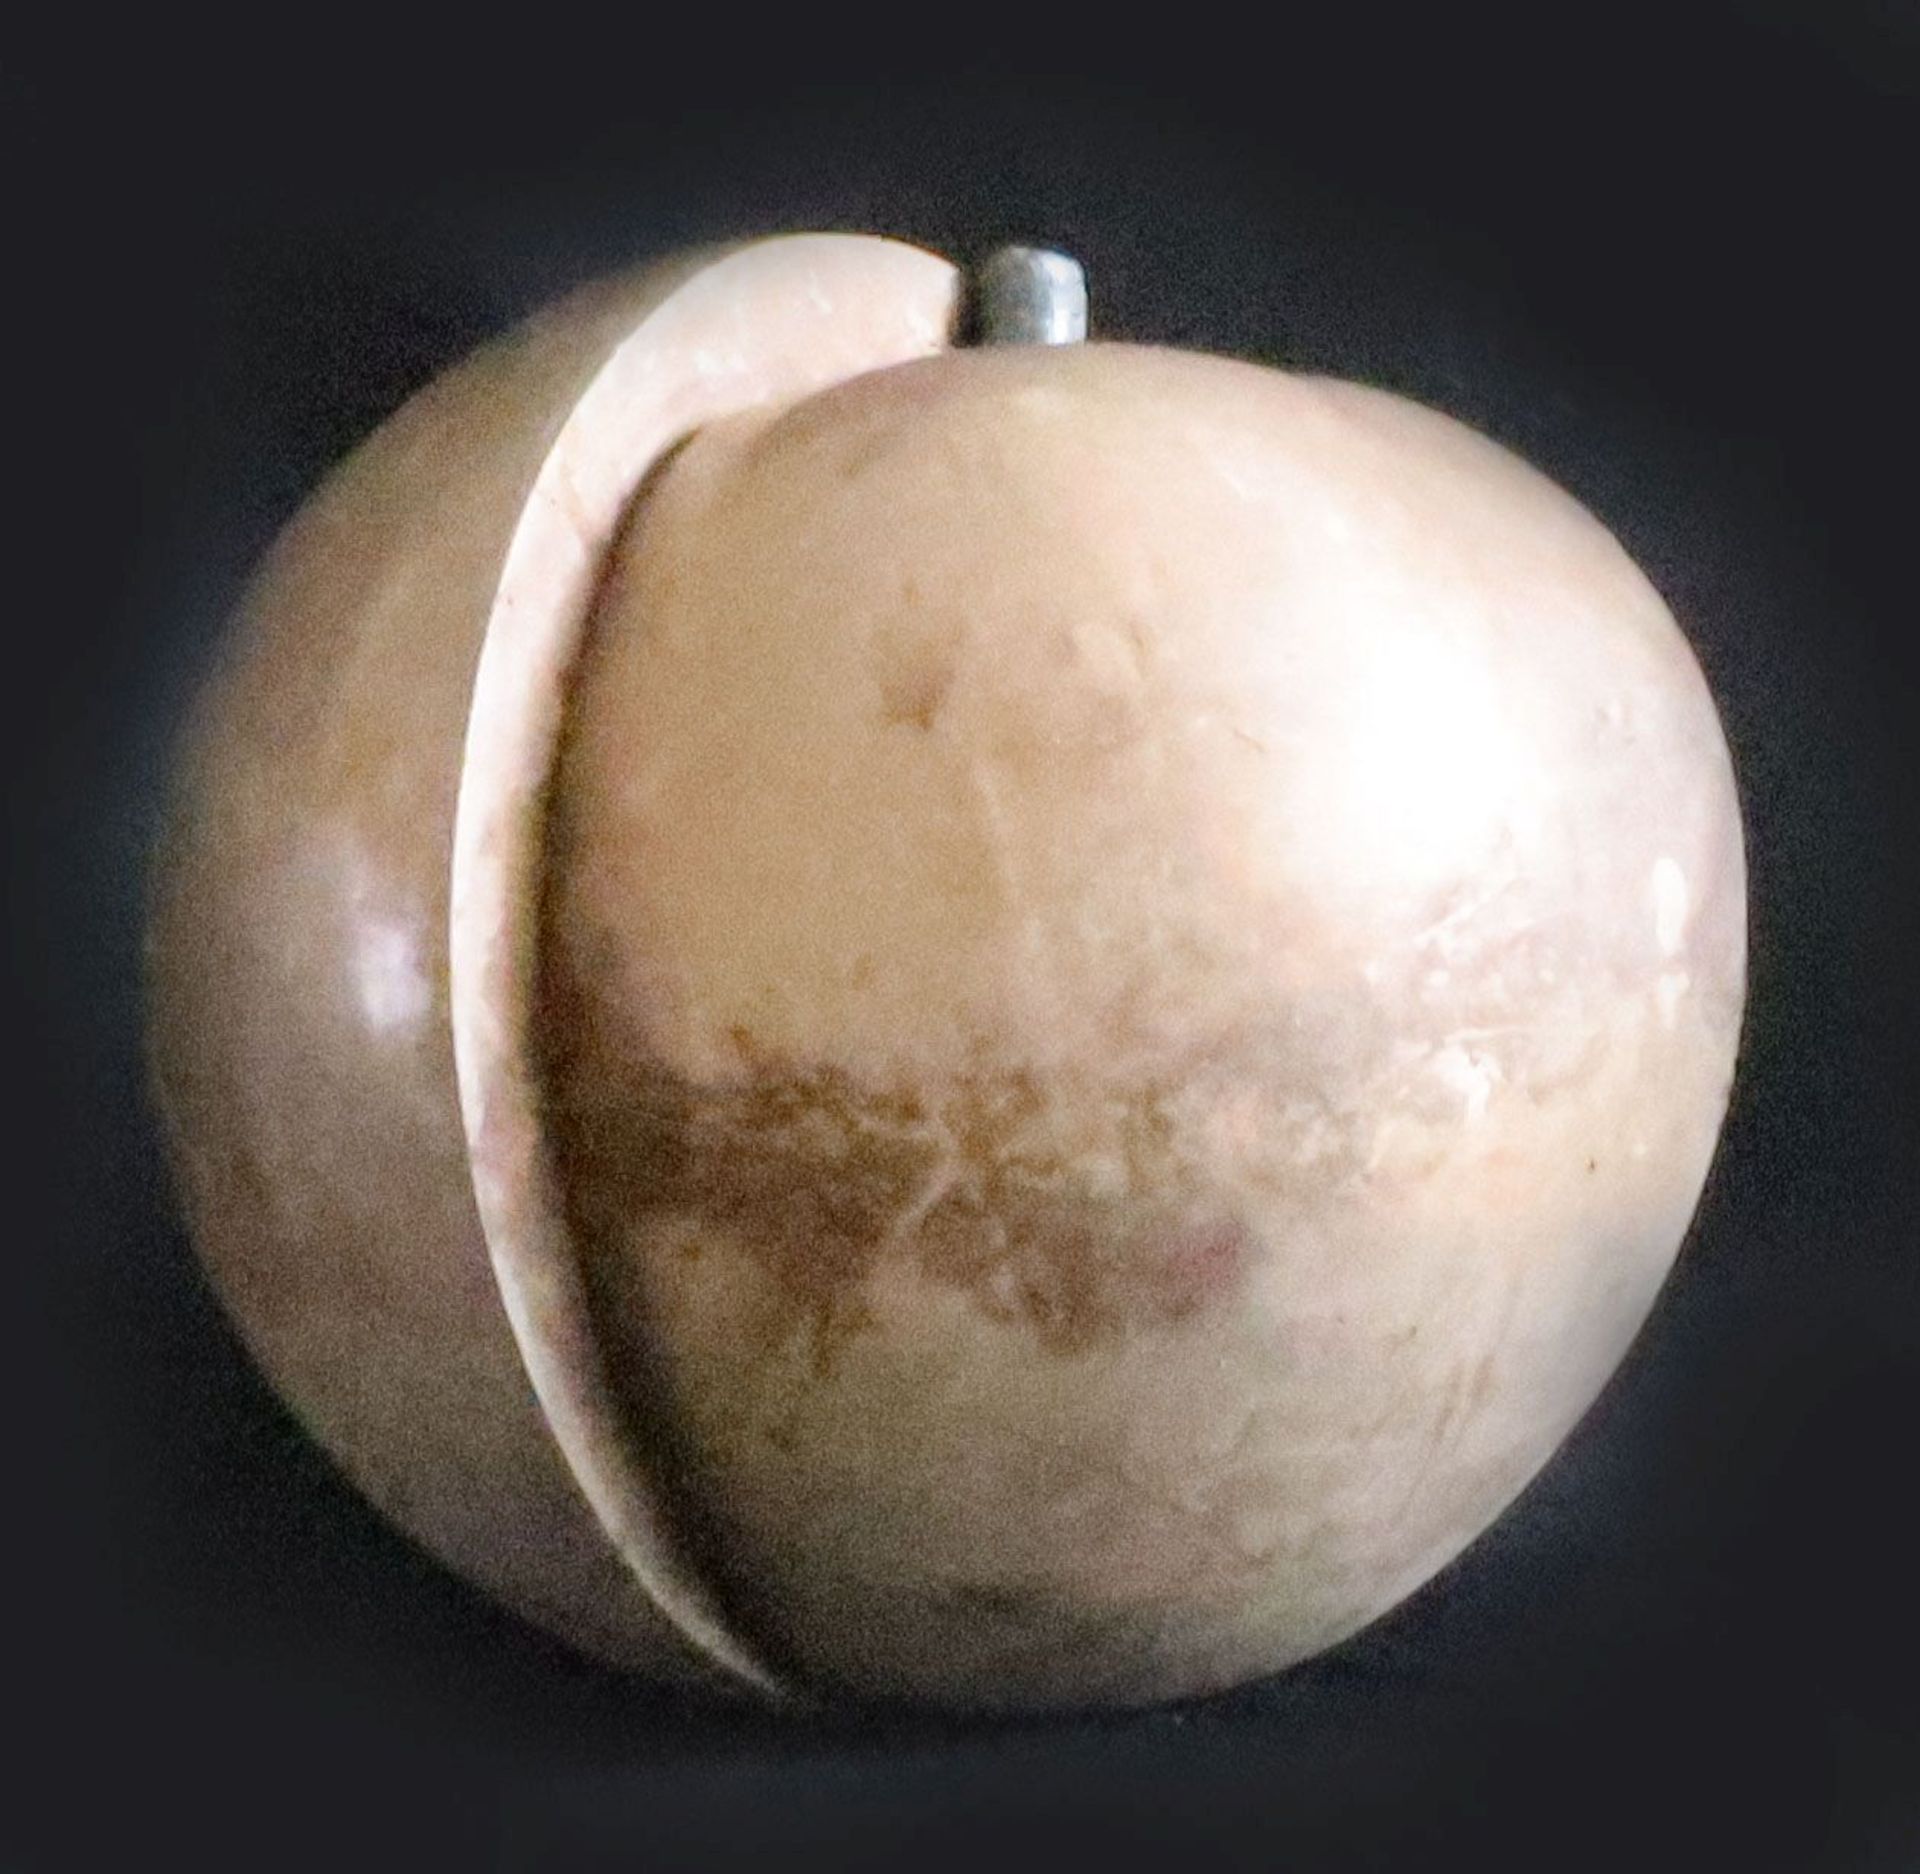 Barbara Schaper-Oeser (1941 - 2019), Apfel aus Bronze, aus zwei verschobenen Hälften bestehend, D. - Image 2 of 2